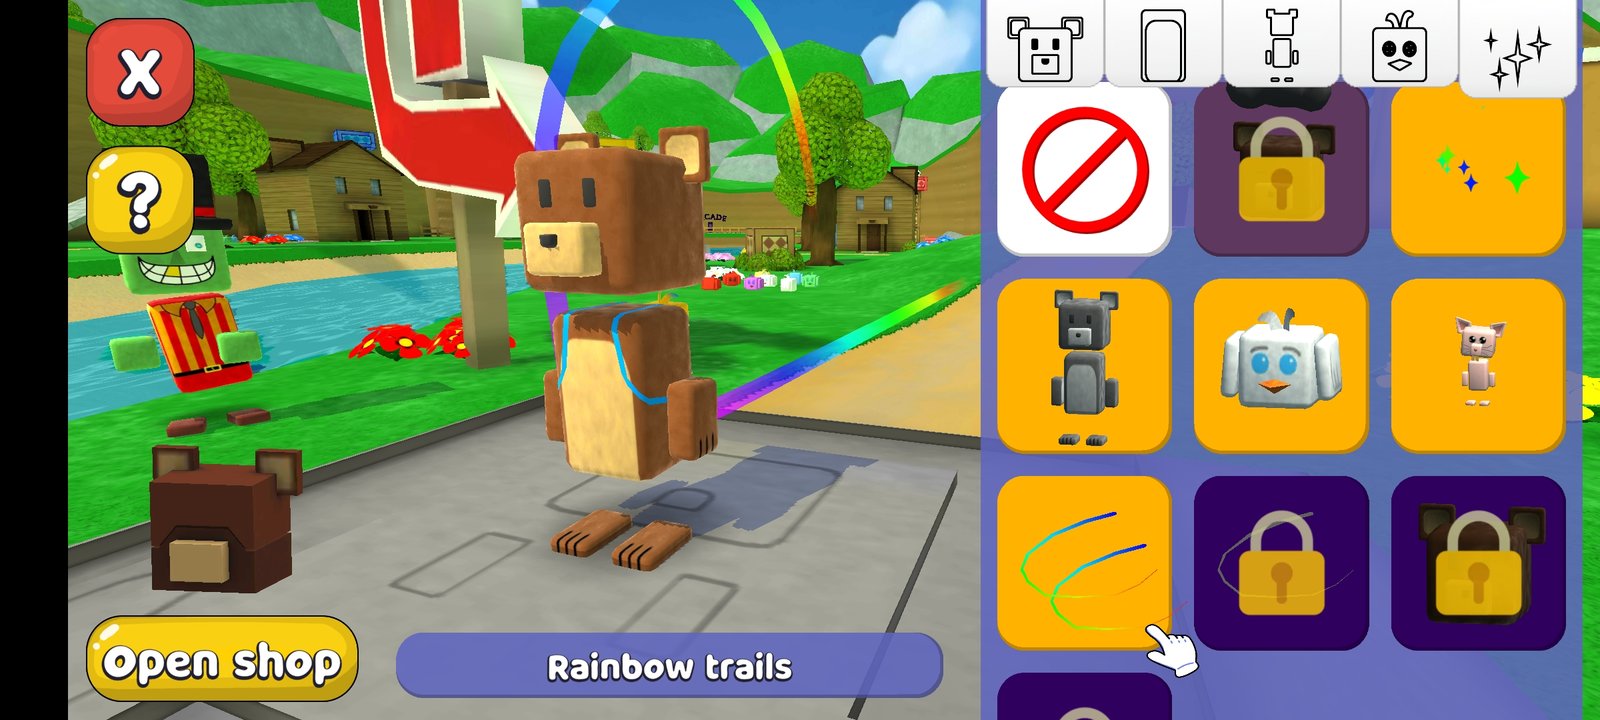 3D Platformer] Super Bear Adventure -  - Android & iOS MODs,  Mobile Games & Apps